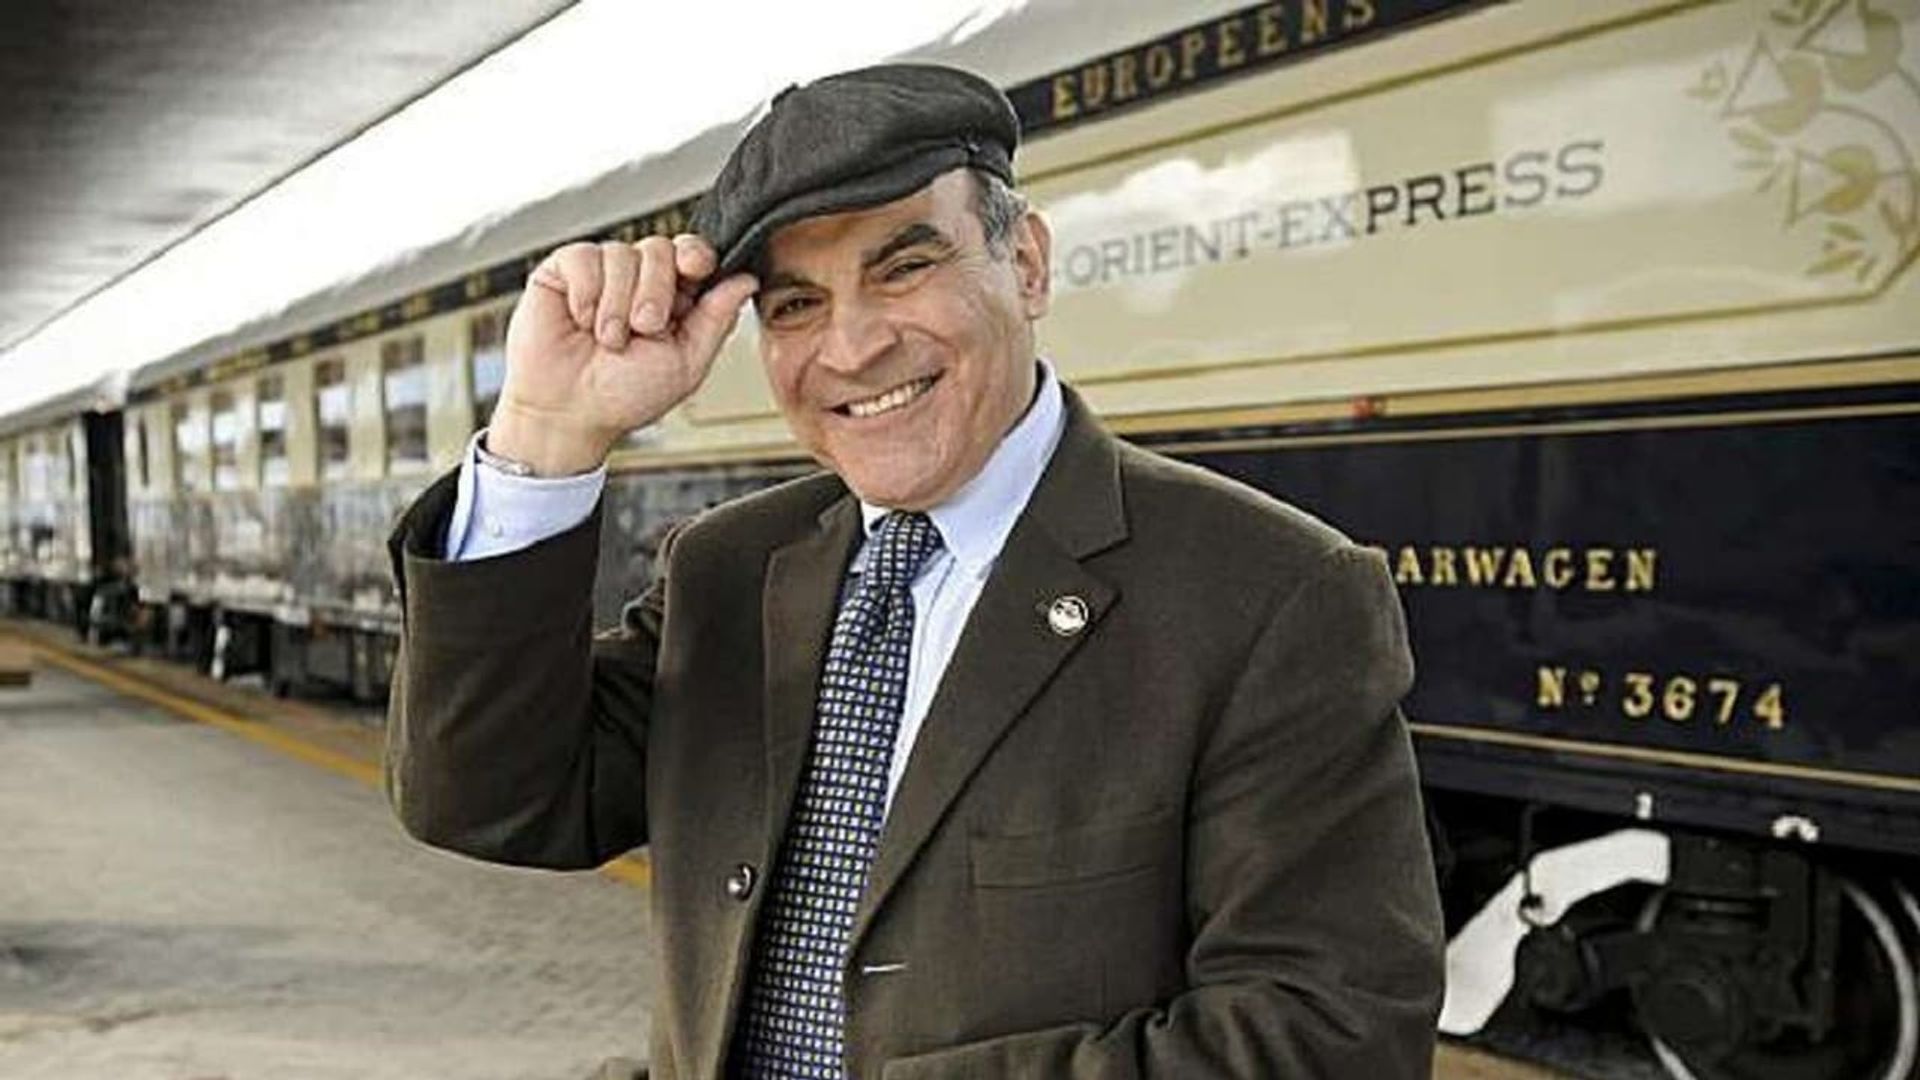 David Suchet on the Orient Express background